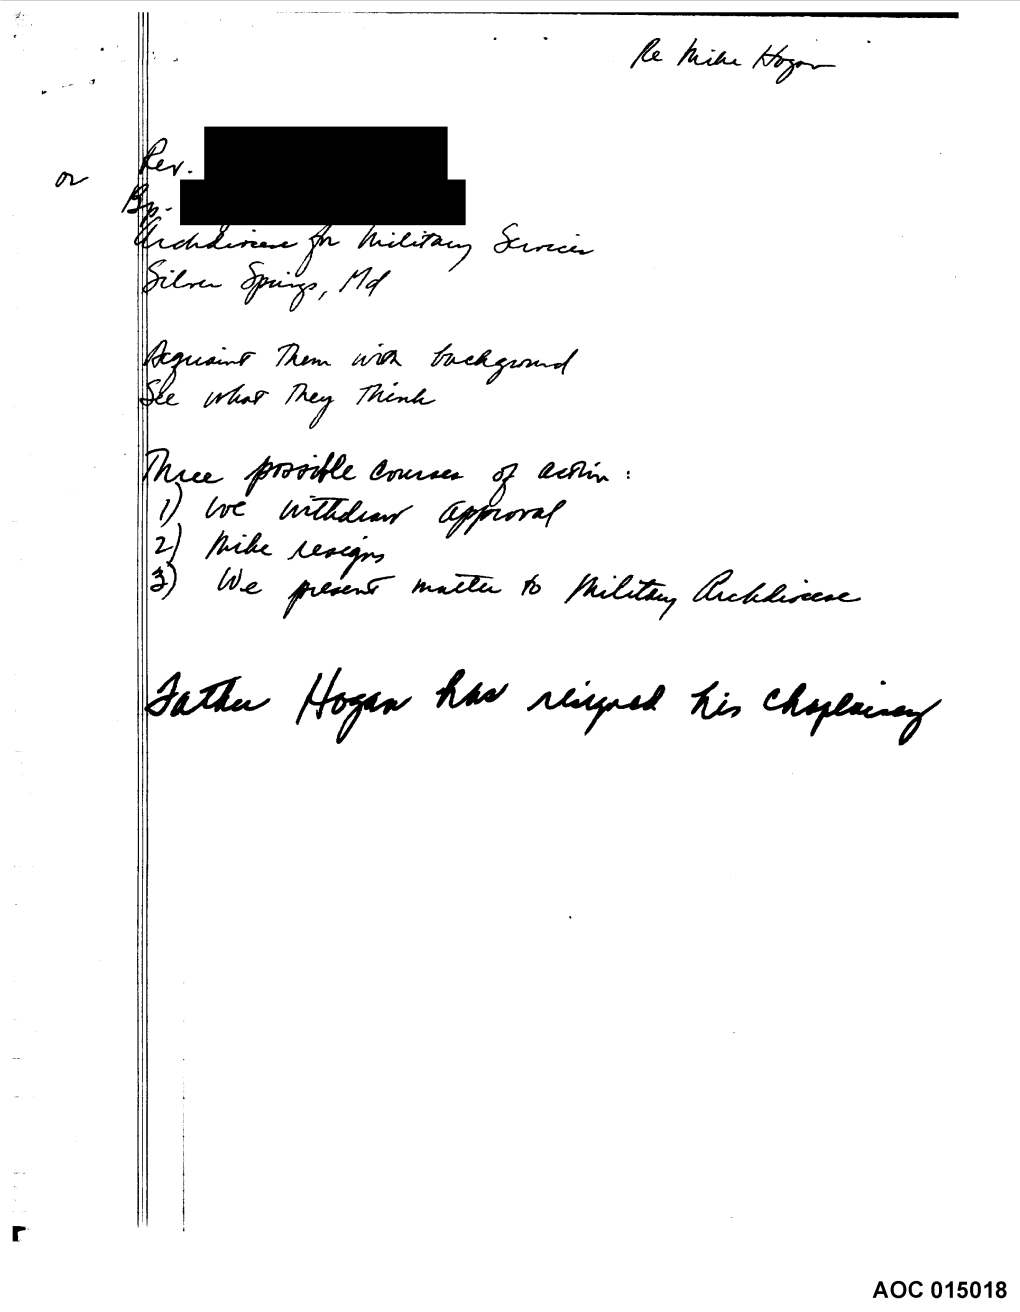 Released Hogan File